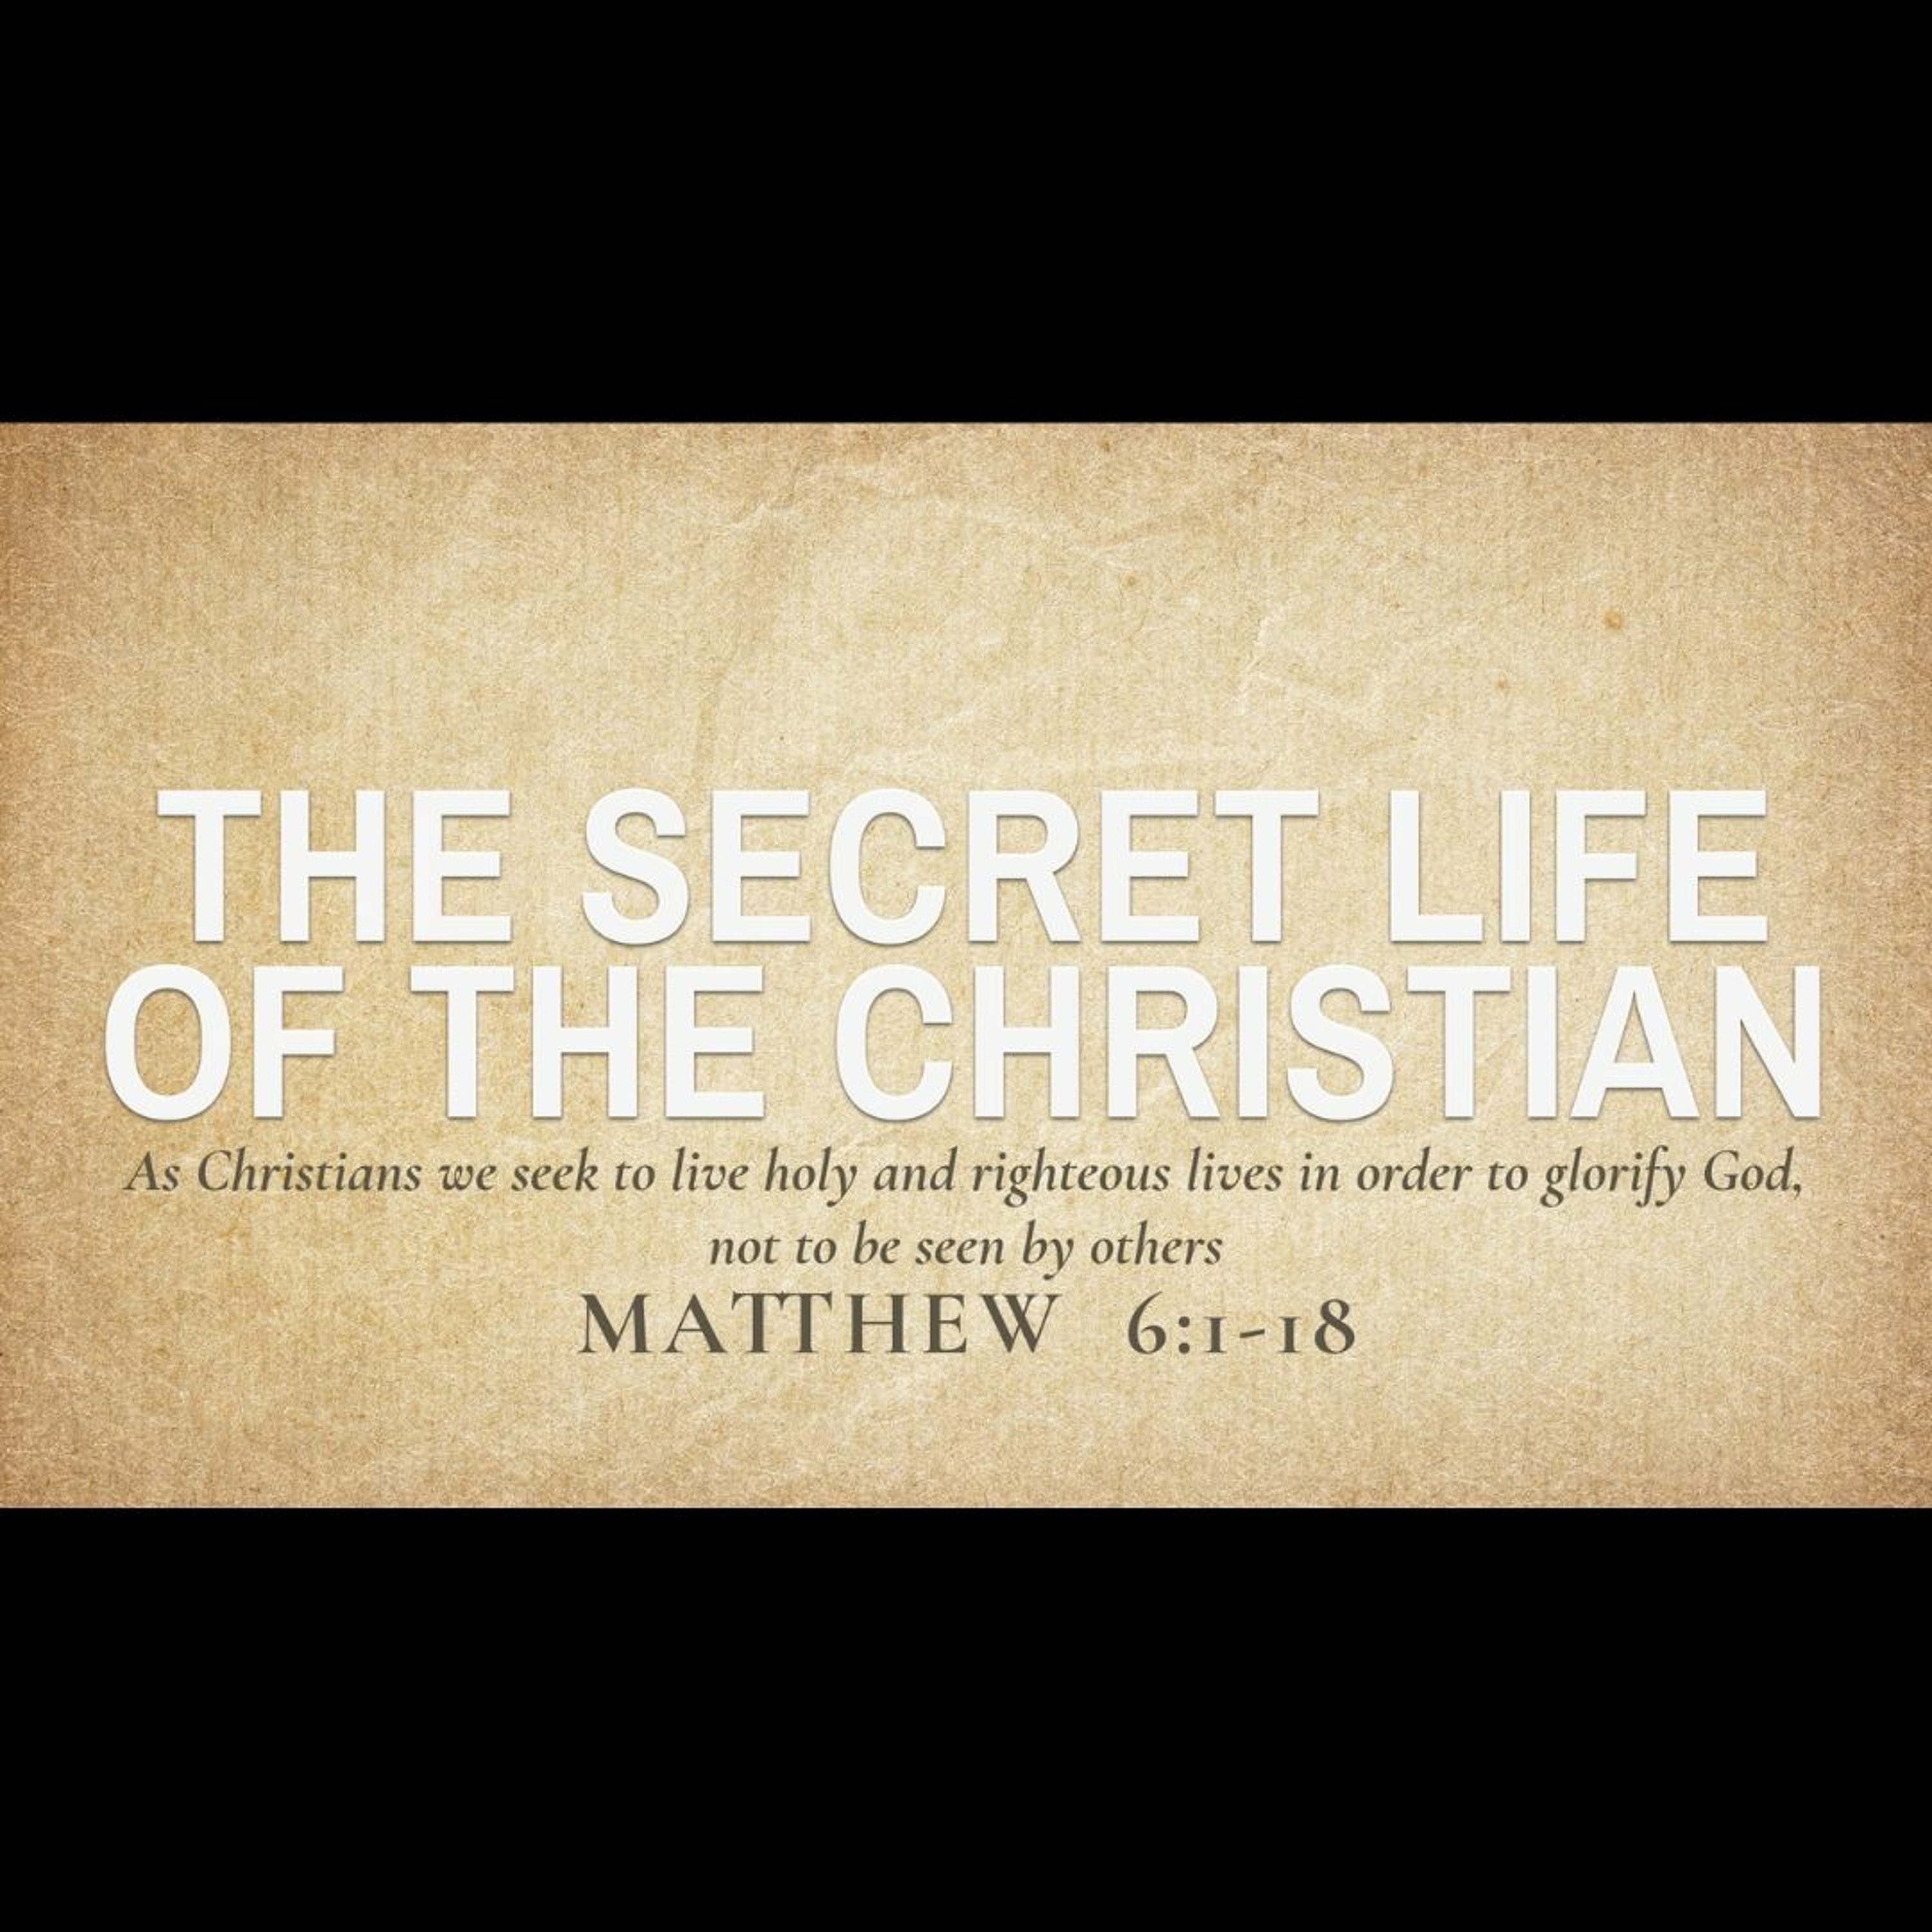 The Secret Life of the Christian (Matthew 6:1-18)